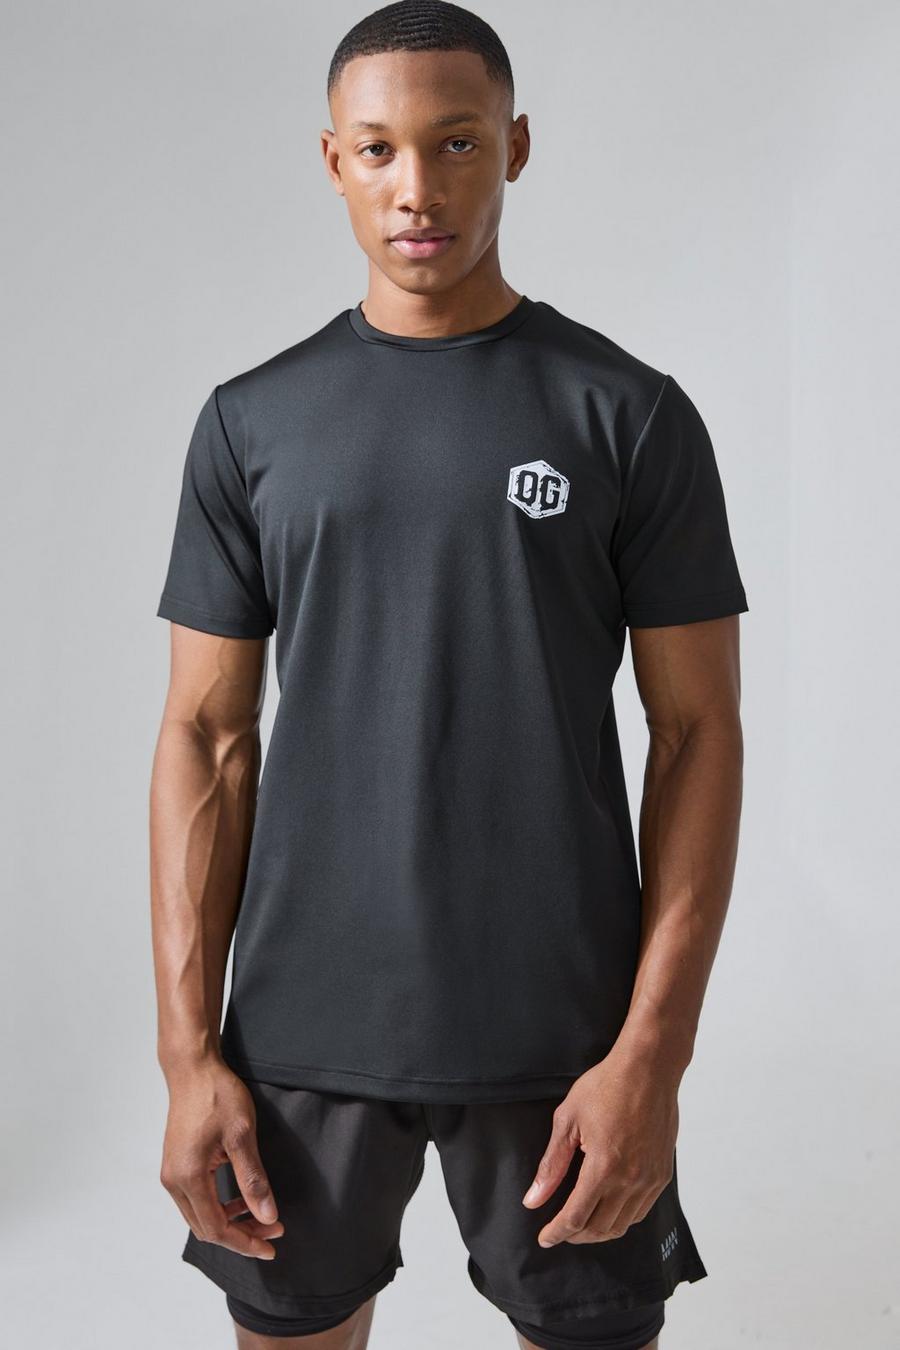 Black Man Active X Og Fitness Slim Fit Performance T-Shirt